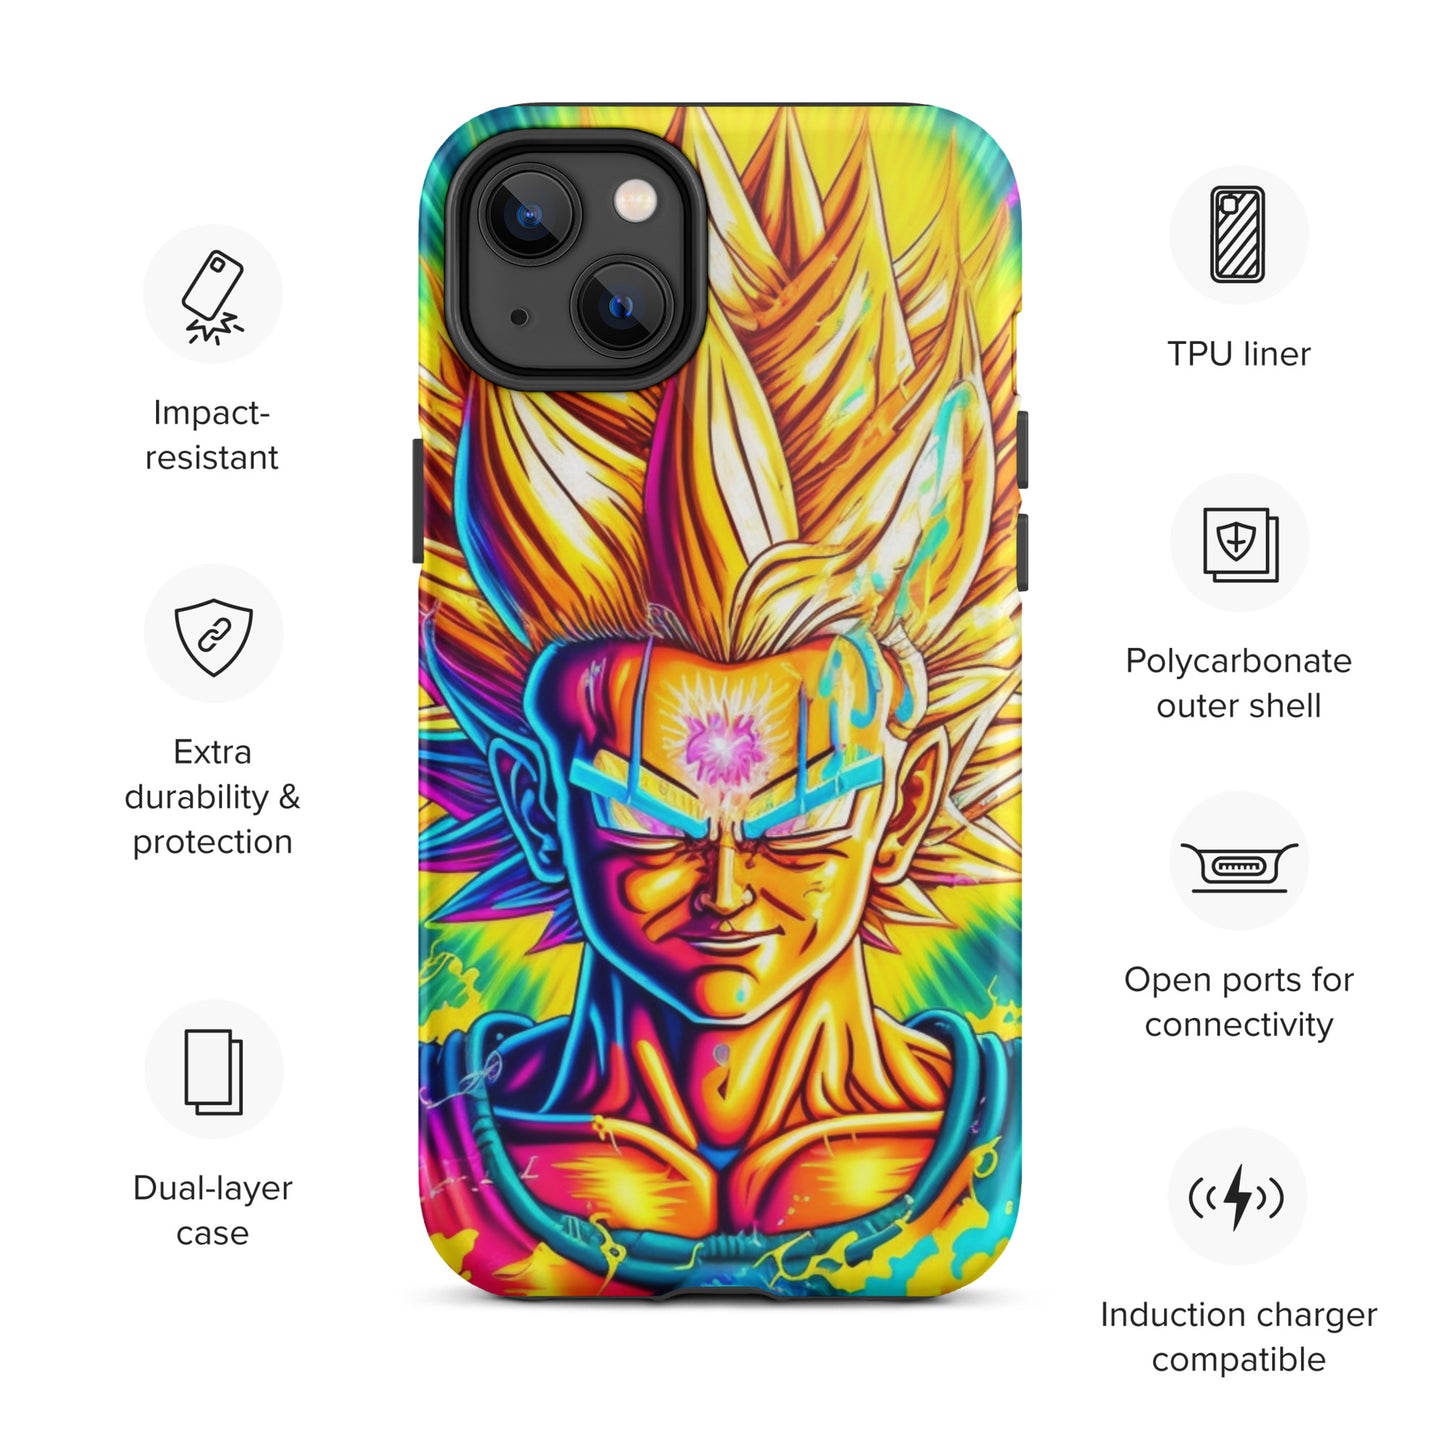 Super Saiyan Trip 1.0 Tough iPhone case